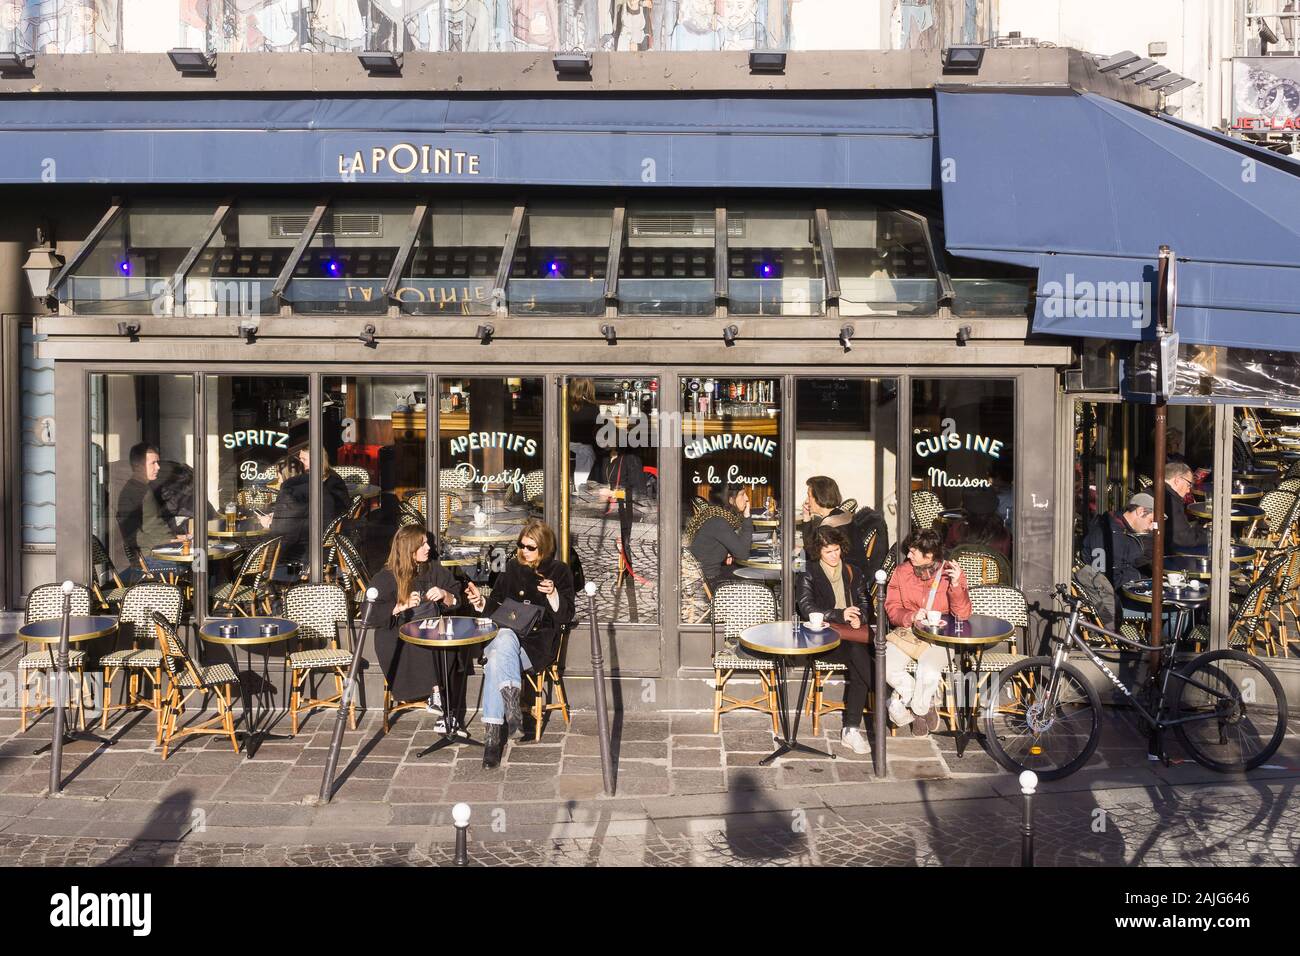 Paris La Pointe - People enjoying sunshine at La Pointe cafe terrace on Rue Montorgueil in the 1st arrondissement of Paris, France, Europe. Stock Photo